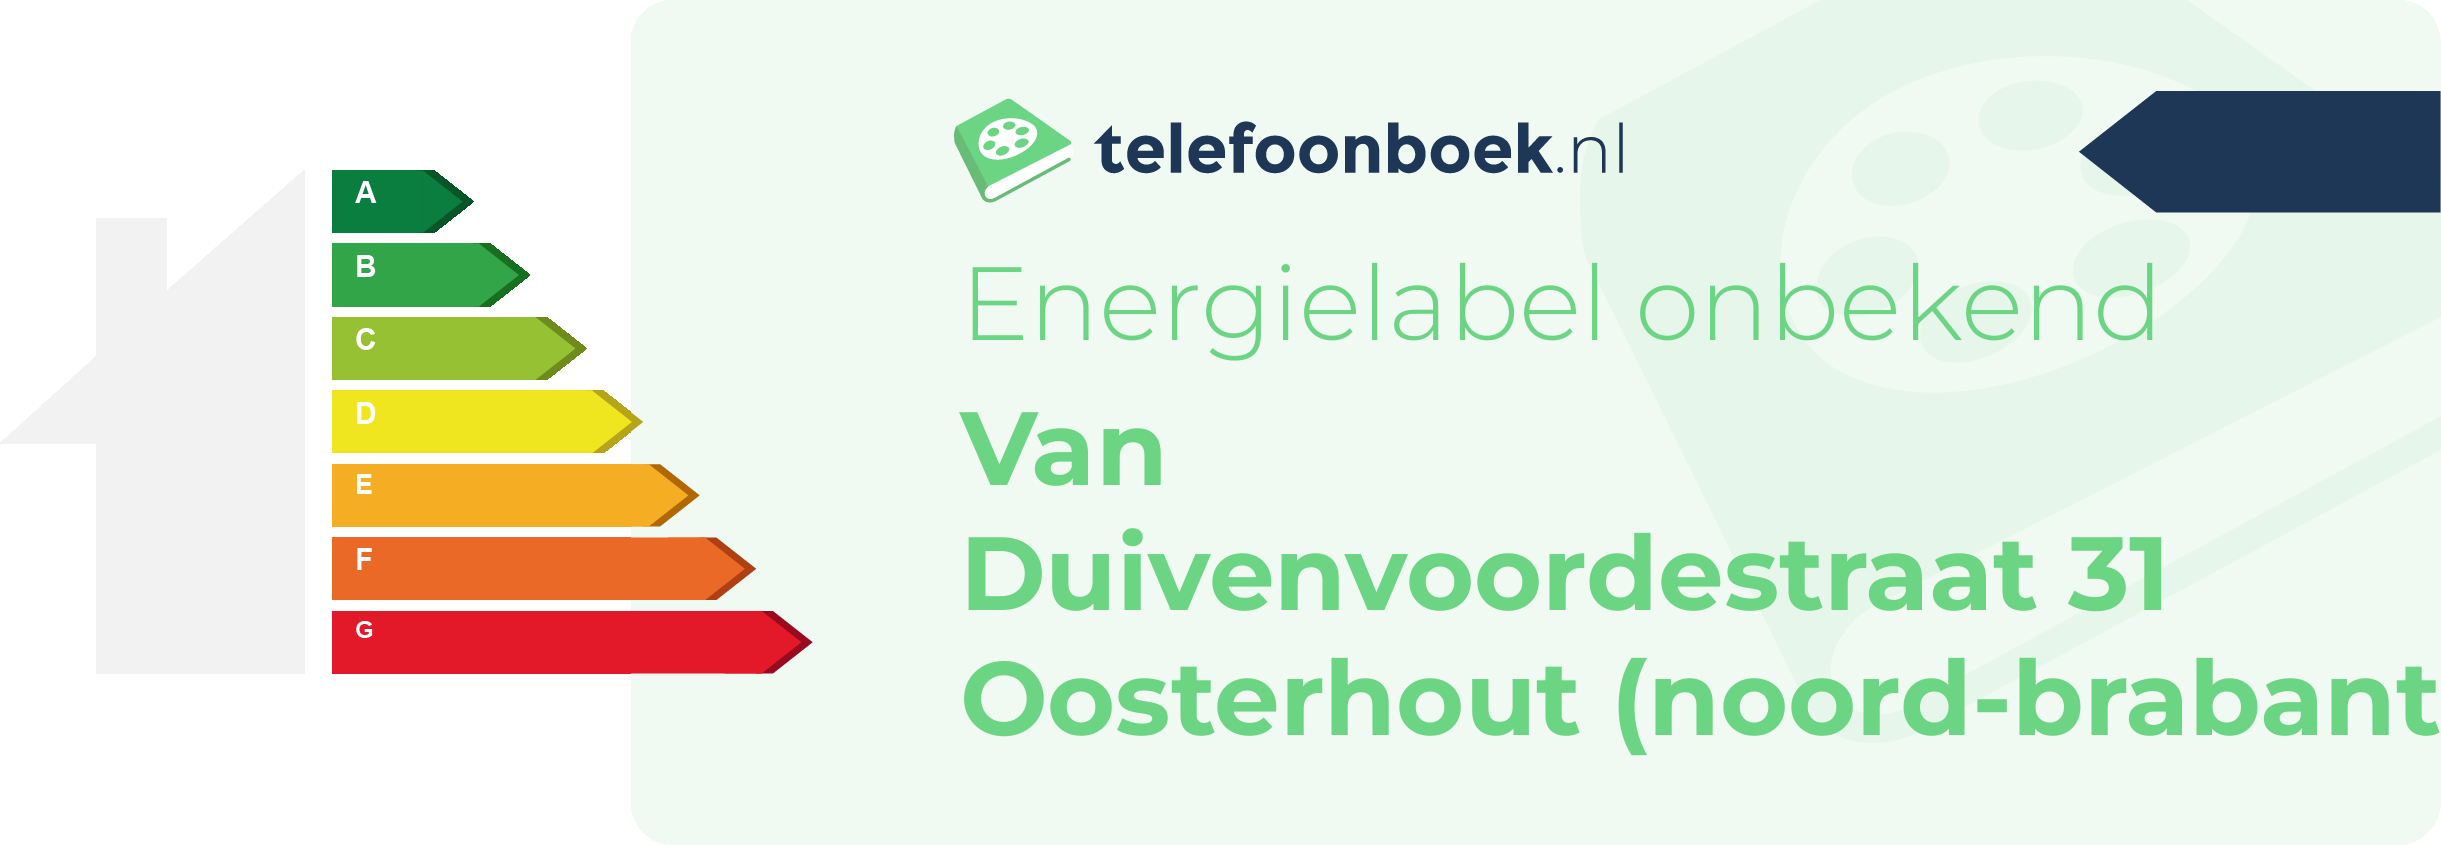 Energielabel Van Duivenvoordestraat 31 Oosterhout (Noord-Brabant)